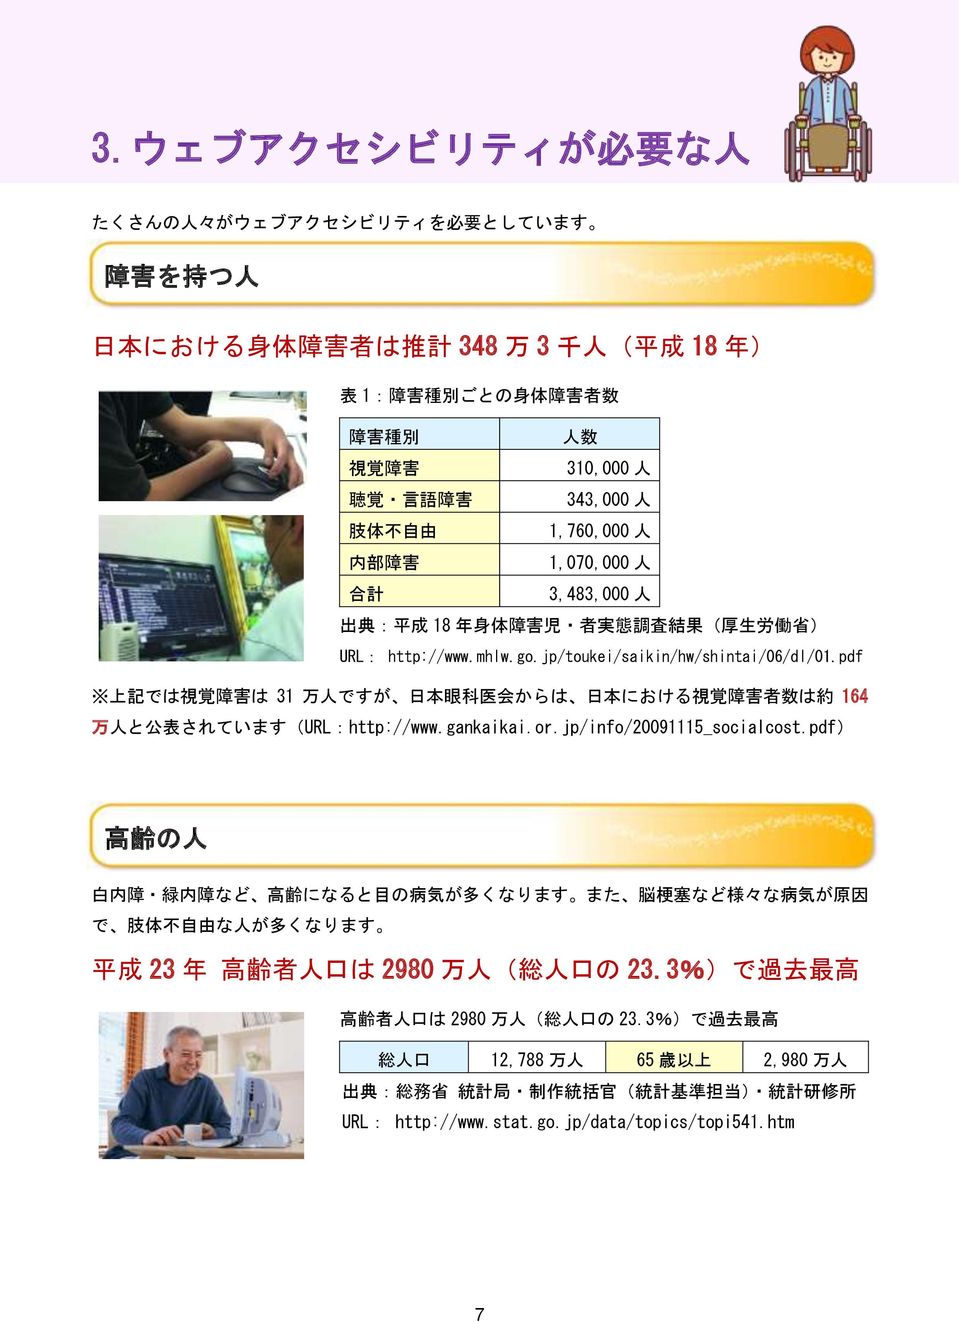 pdf 上 記 では 視 覚 障 害 は 31 万 人 ですが 日 本 眼 科 医 会 からは 日 本 における 視 覚 障 害 者 数 は 約 164 万 人 と 公 表 されています(URL:http://www.gankaikai.or.jp/info/20091115_socialcost.